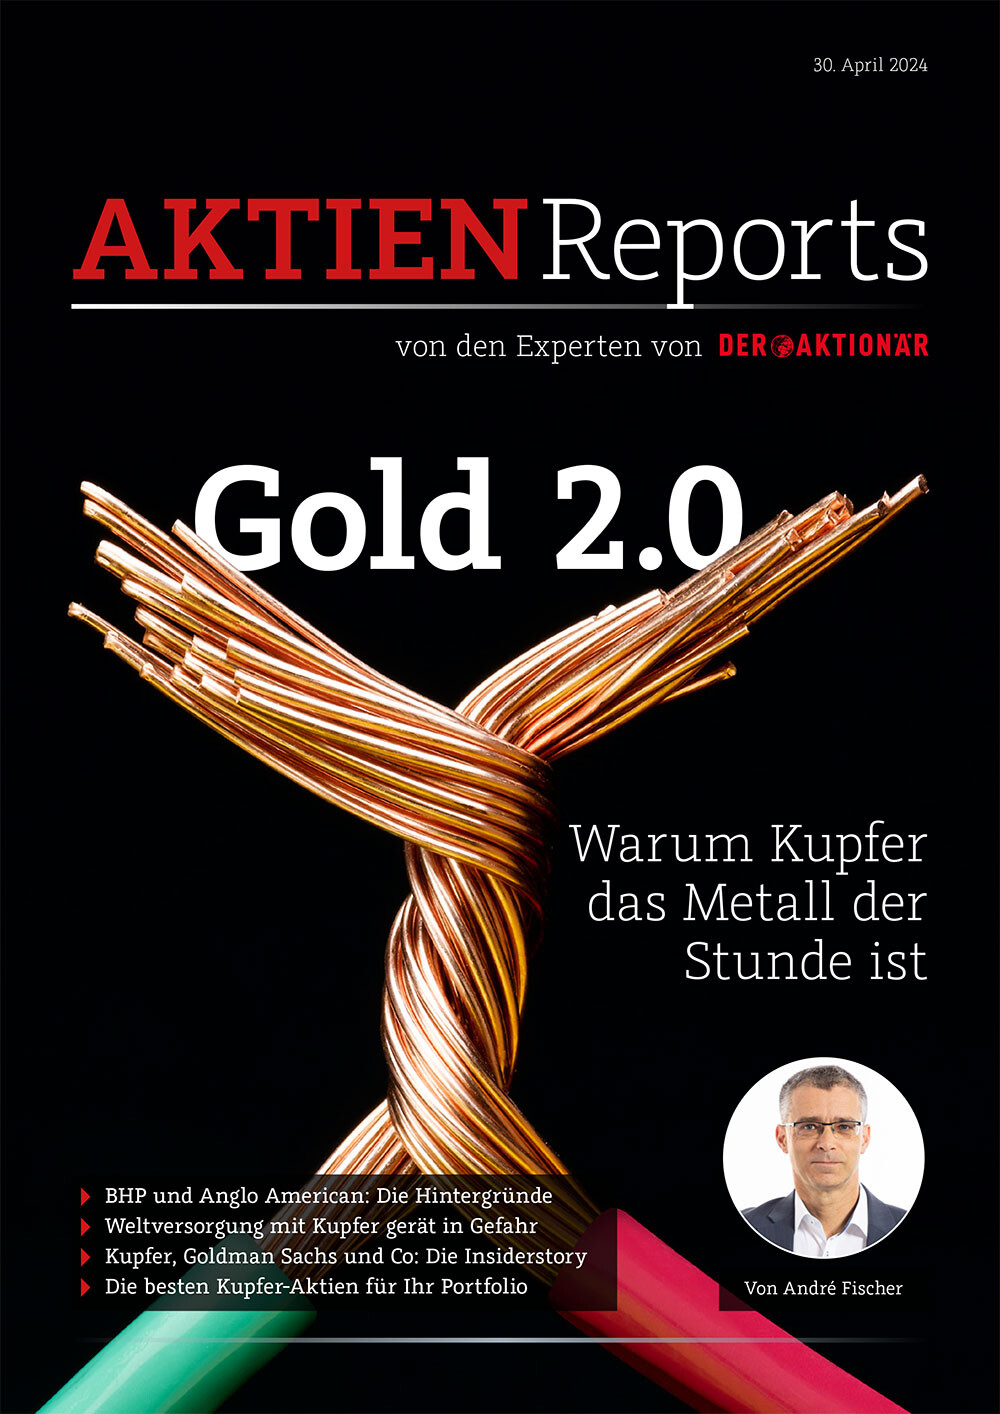 Aktienreport, Gold, Rohstoffe, Kupfer, André Fischer